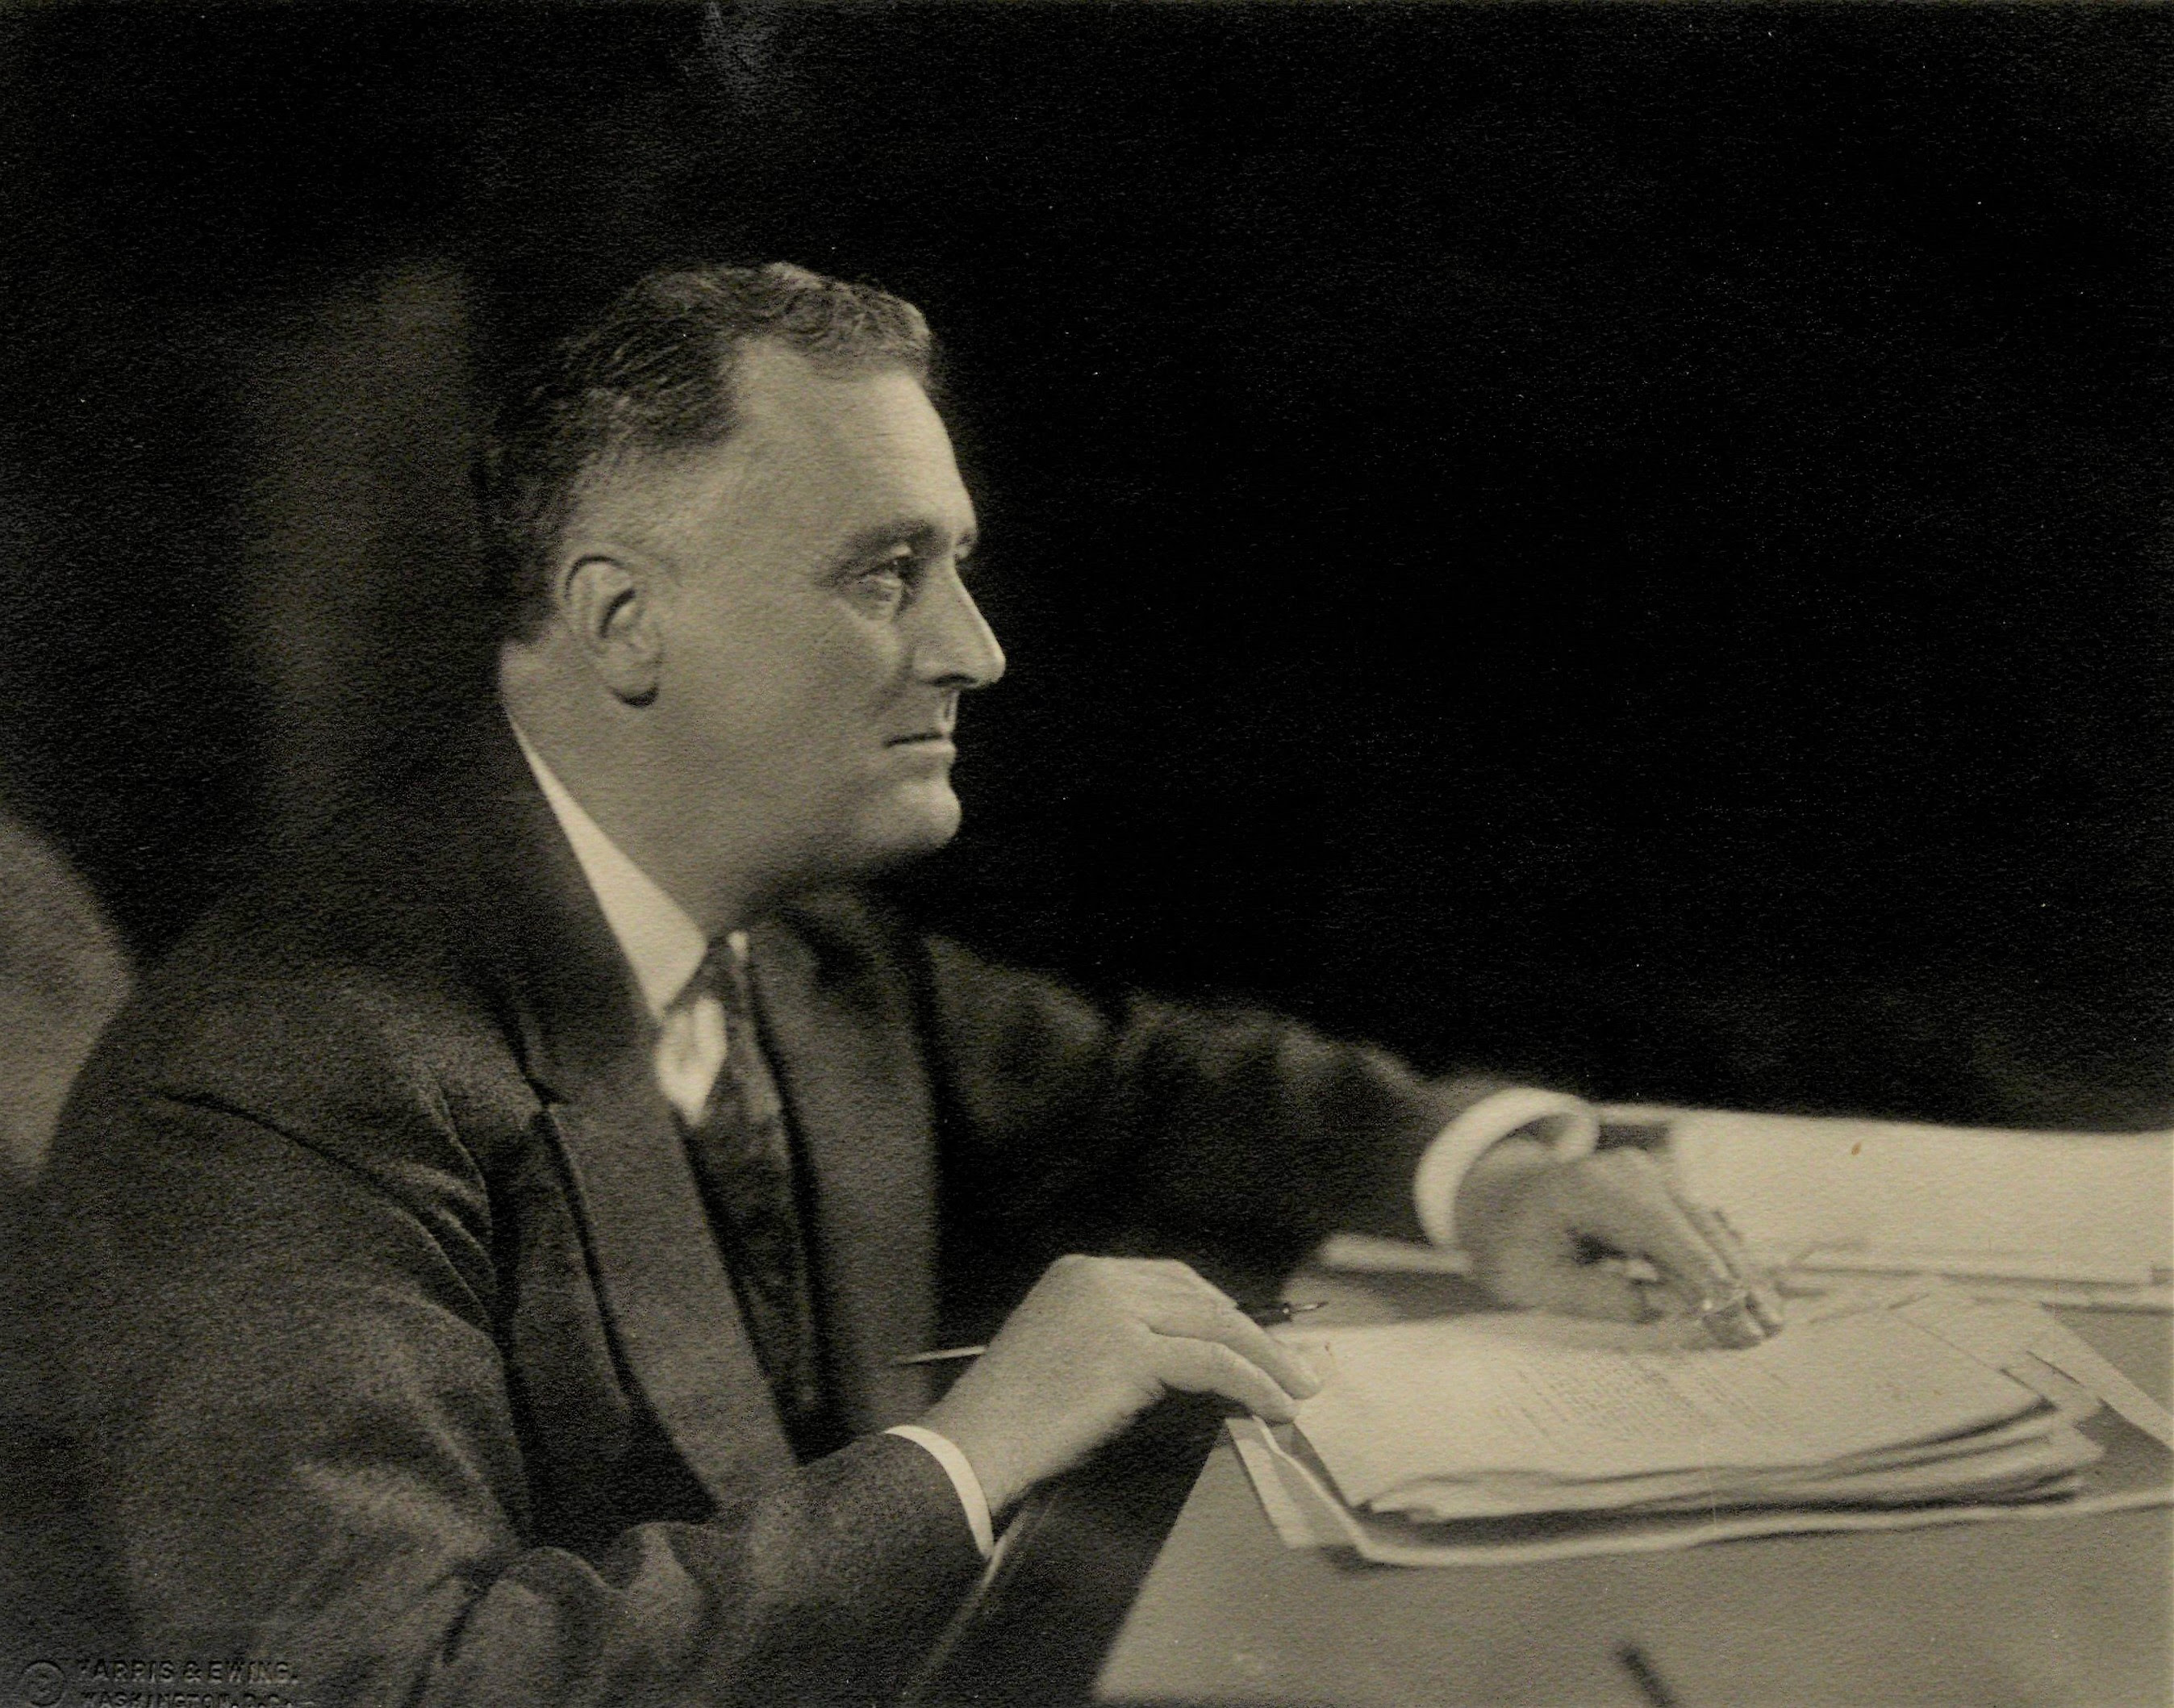 Franklin Roosevelt signing a document, ca. 1935 (Gilder Lehrman Institute, GLC04675.06)